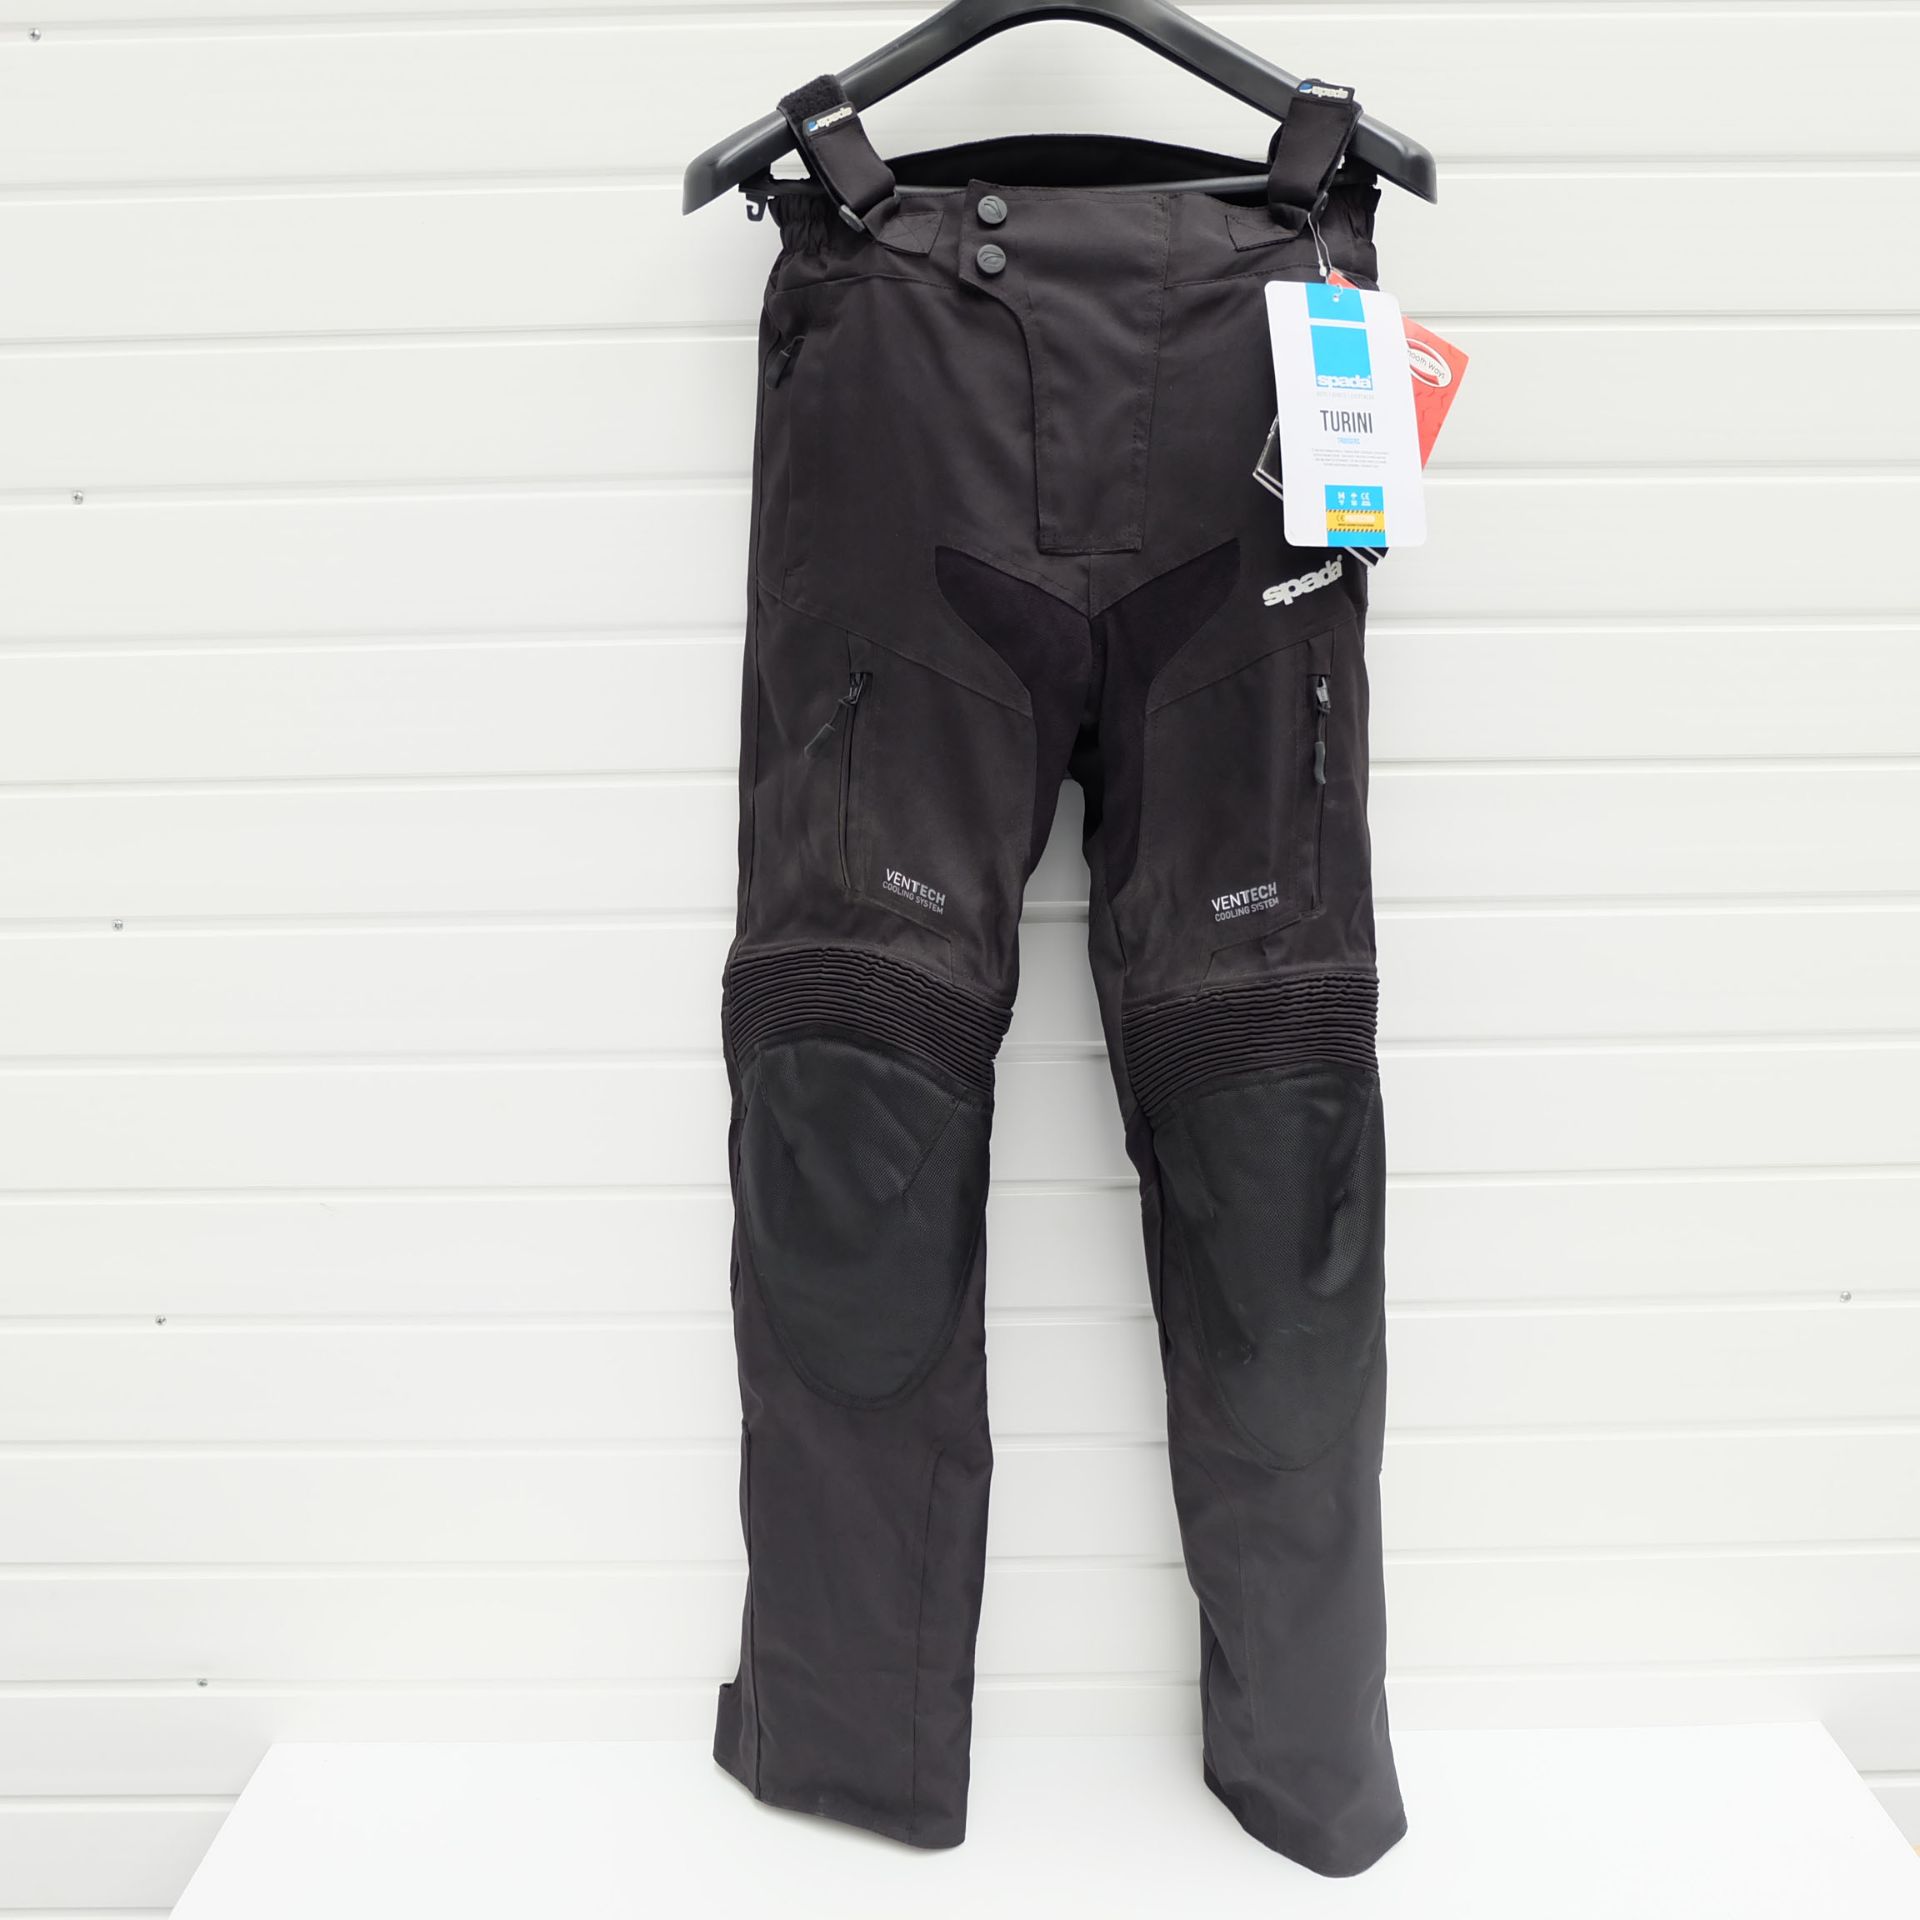 Spada Turini Motorcycle Trousers (Mens) Black. Medium